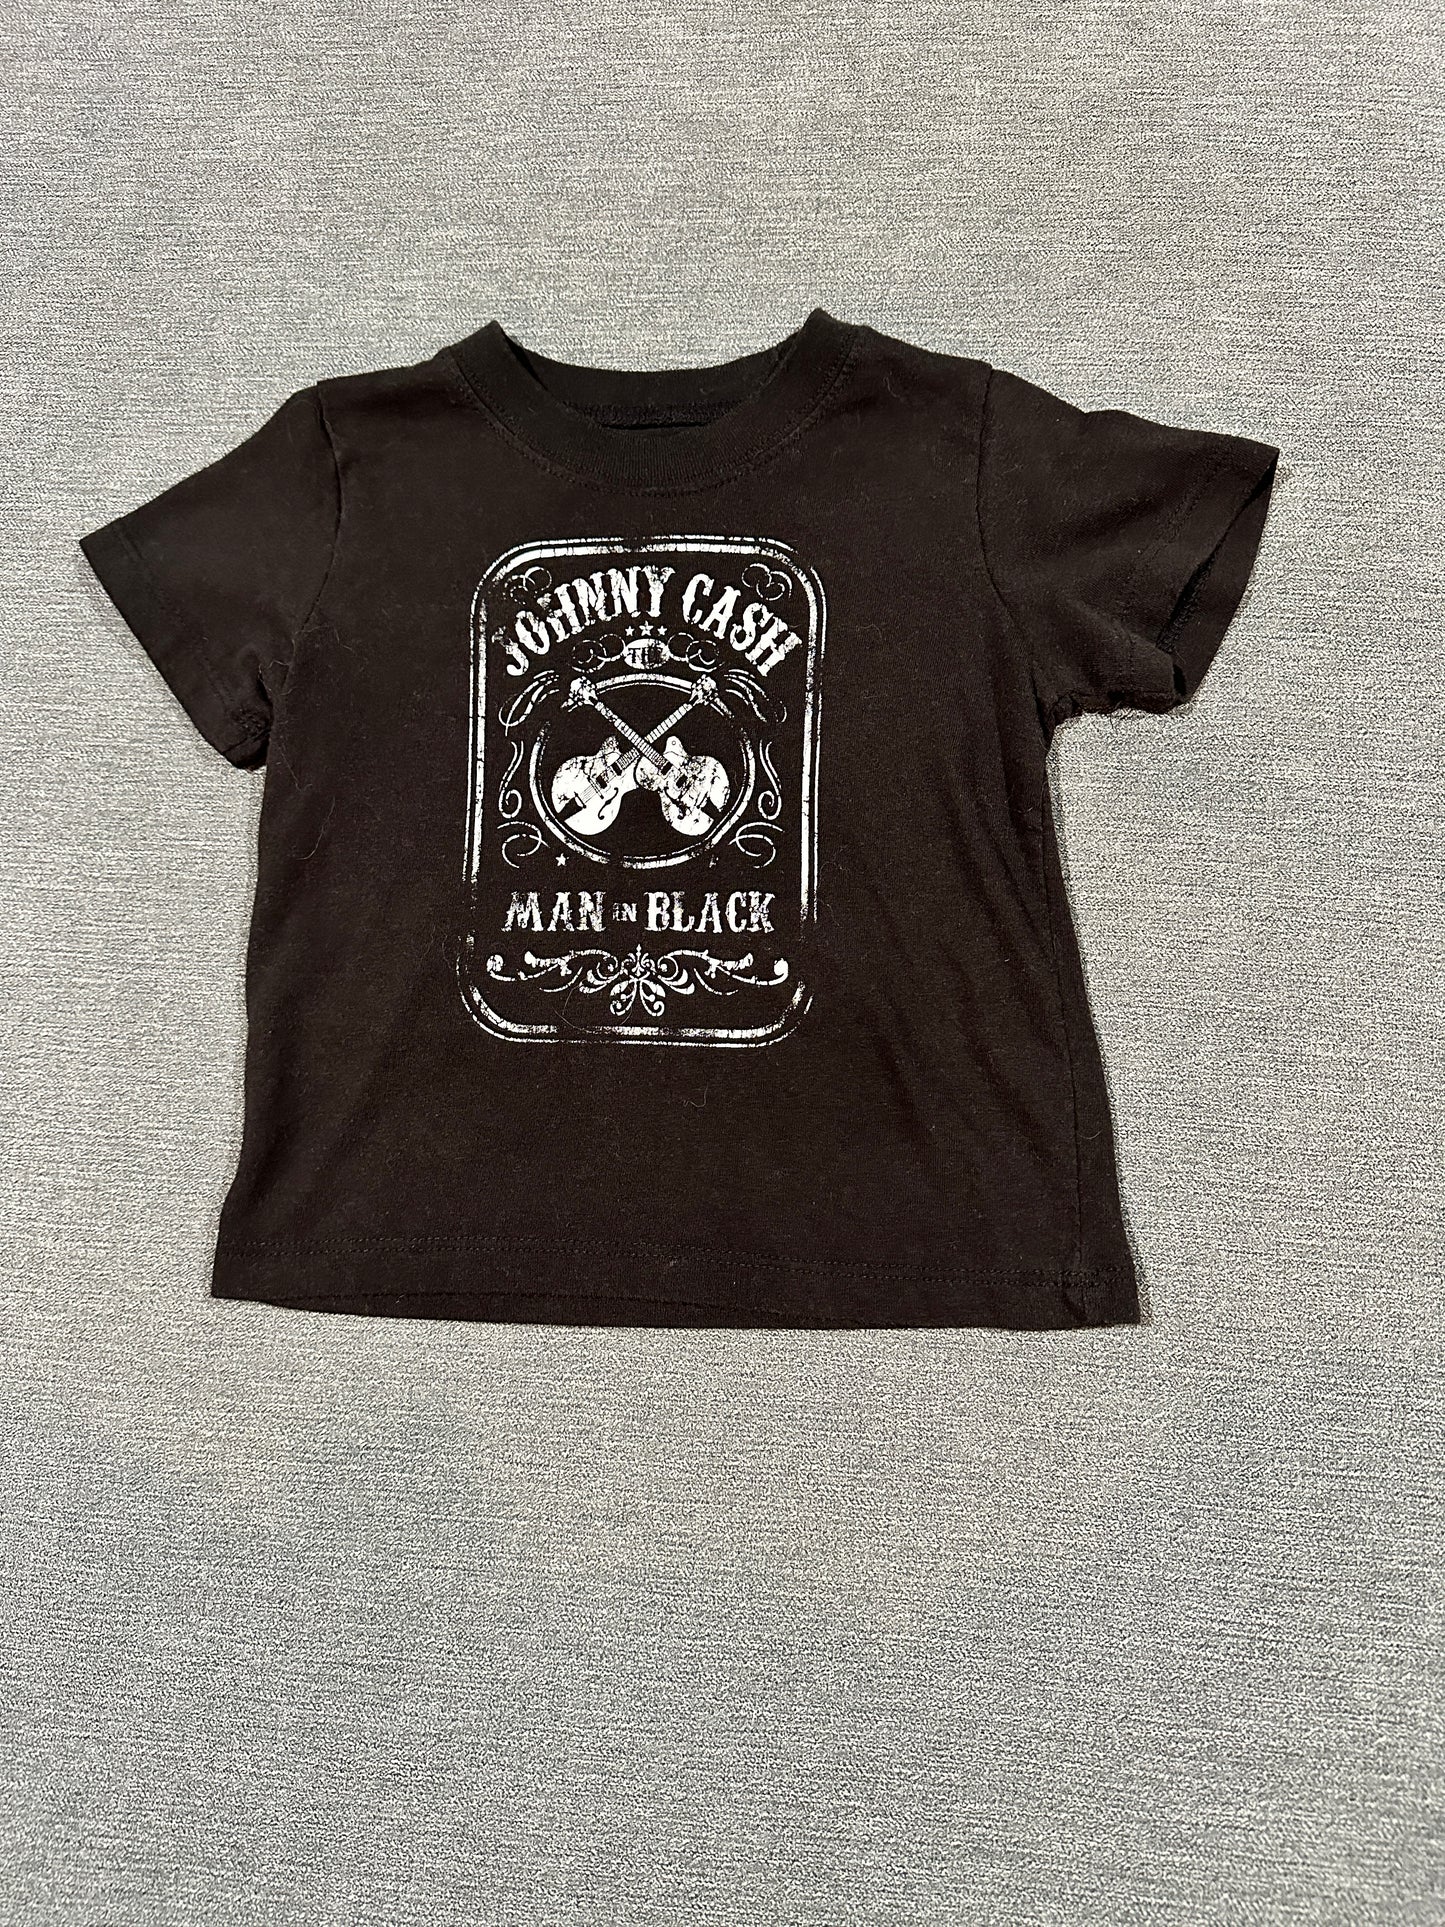 Boys 18 month Johnny Cash T-shirt